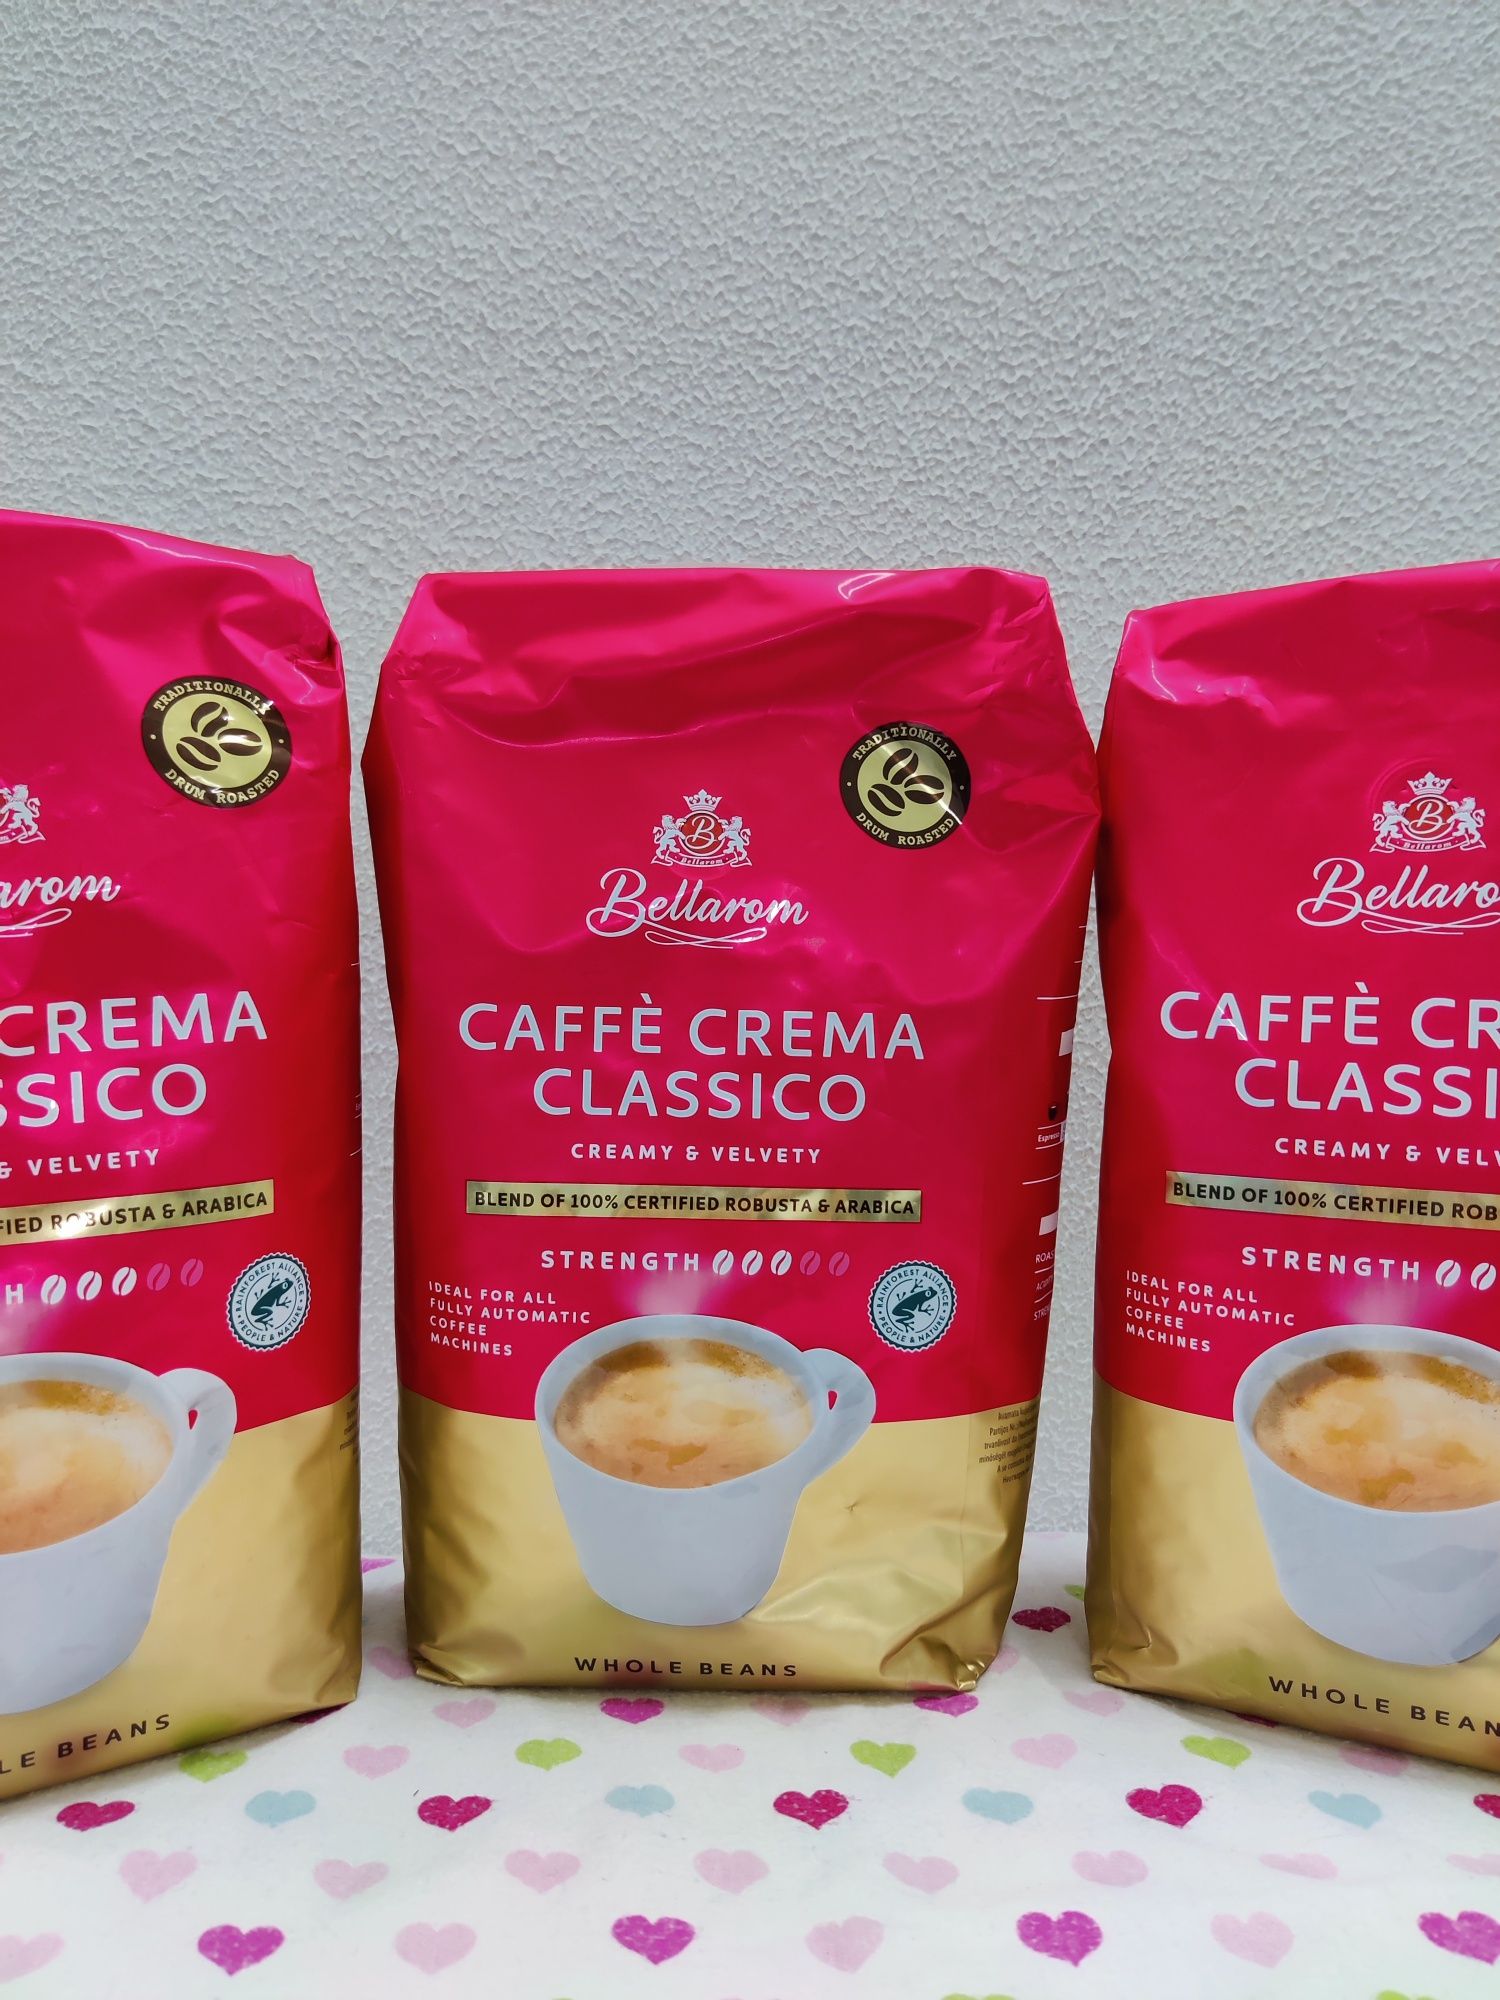 Німецька топова ніжна кава Bellarom™ Caffe Crema Classico.